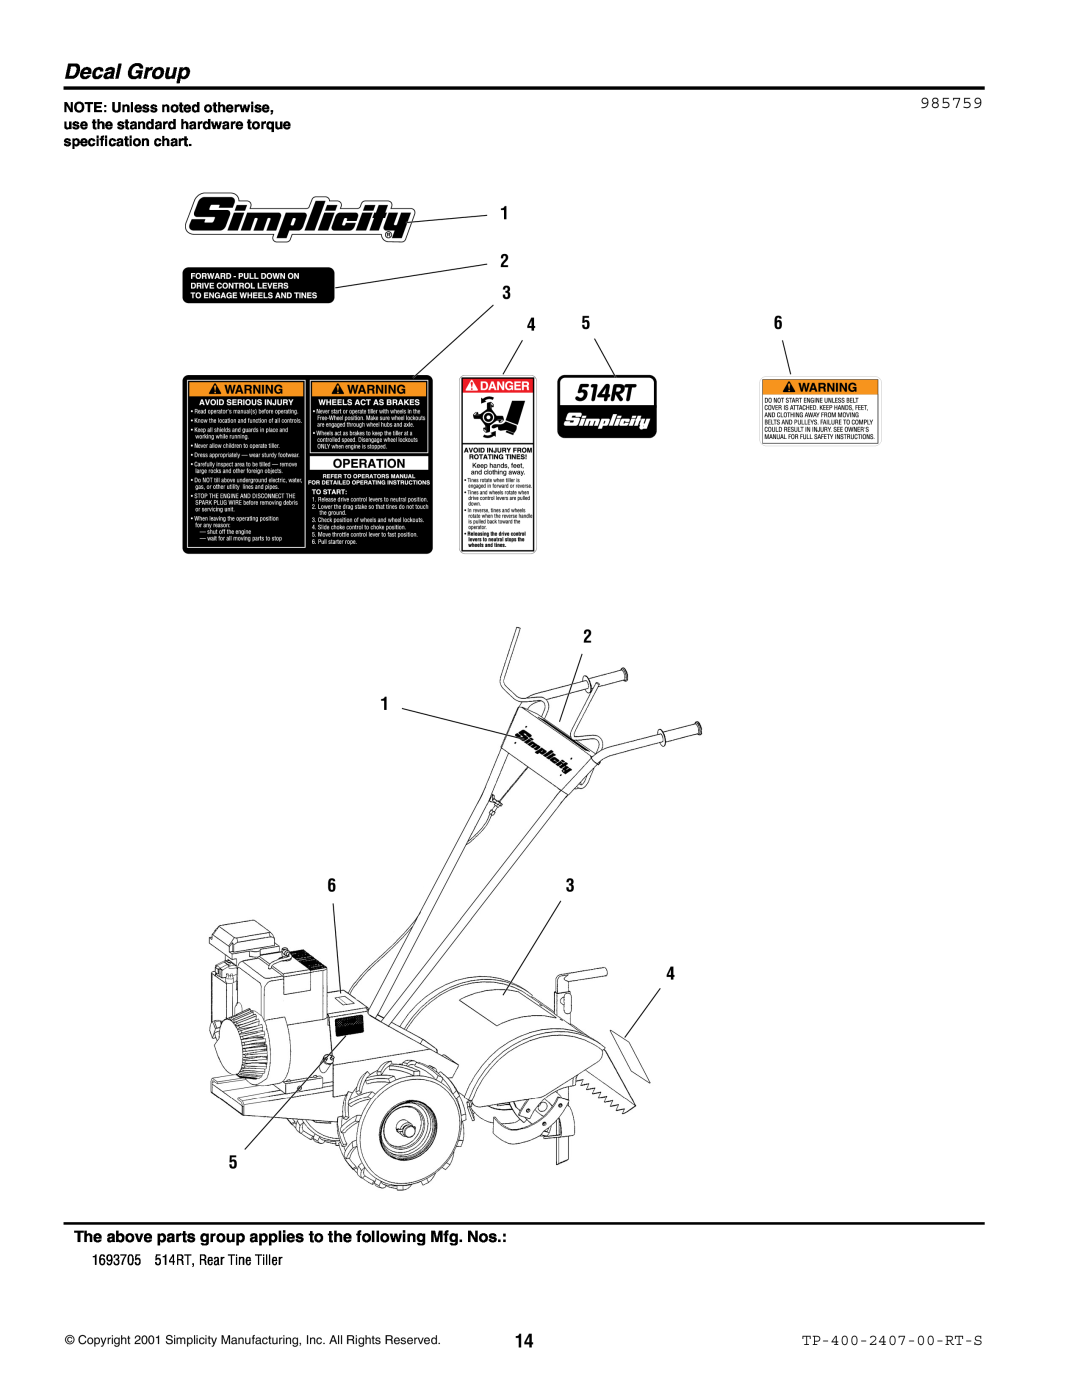 Simplicity 514RT manual Decal Group, 985759, TP-400-2407-00-RT-S 